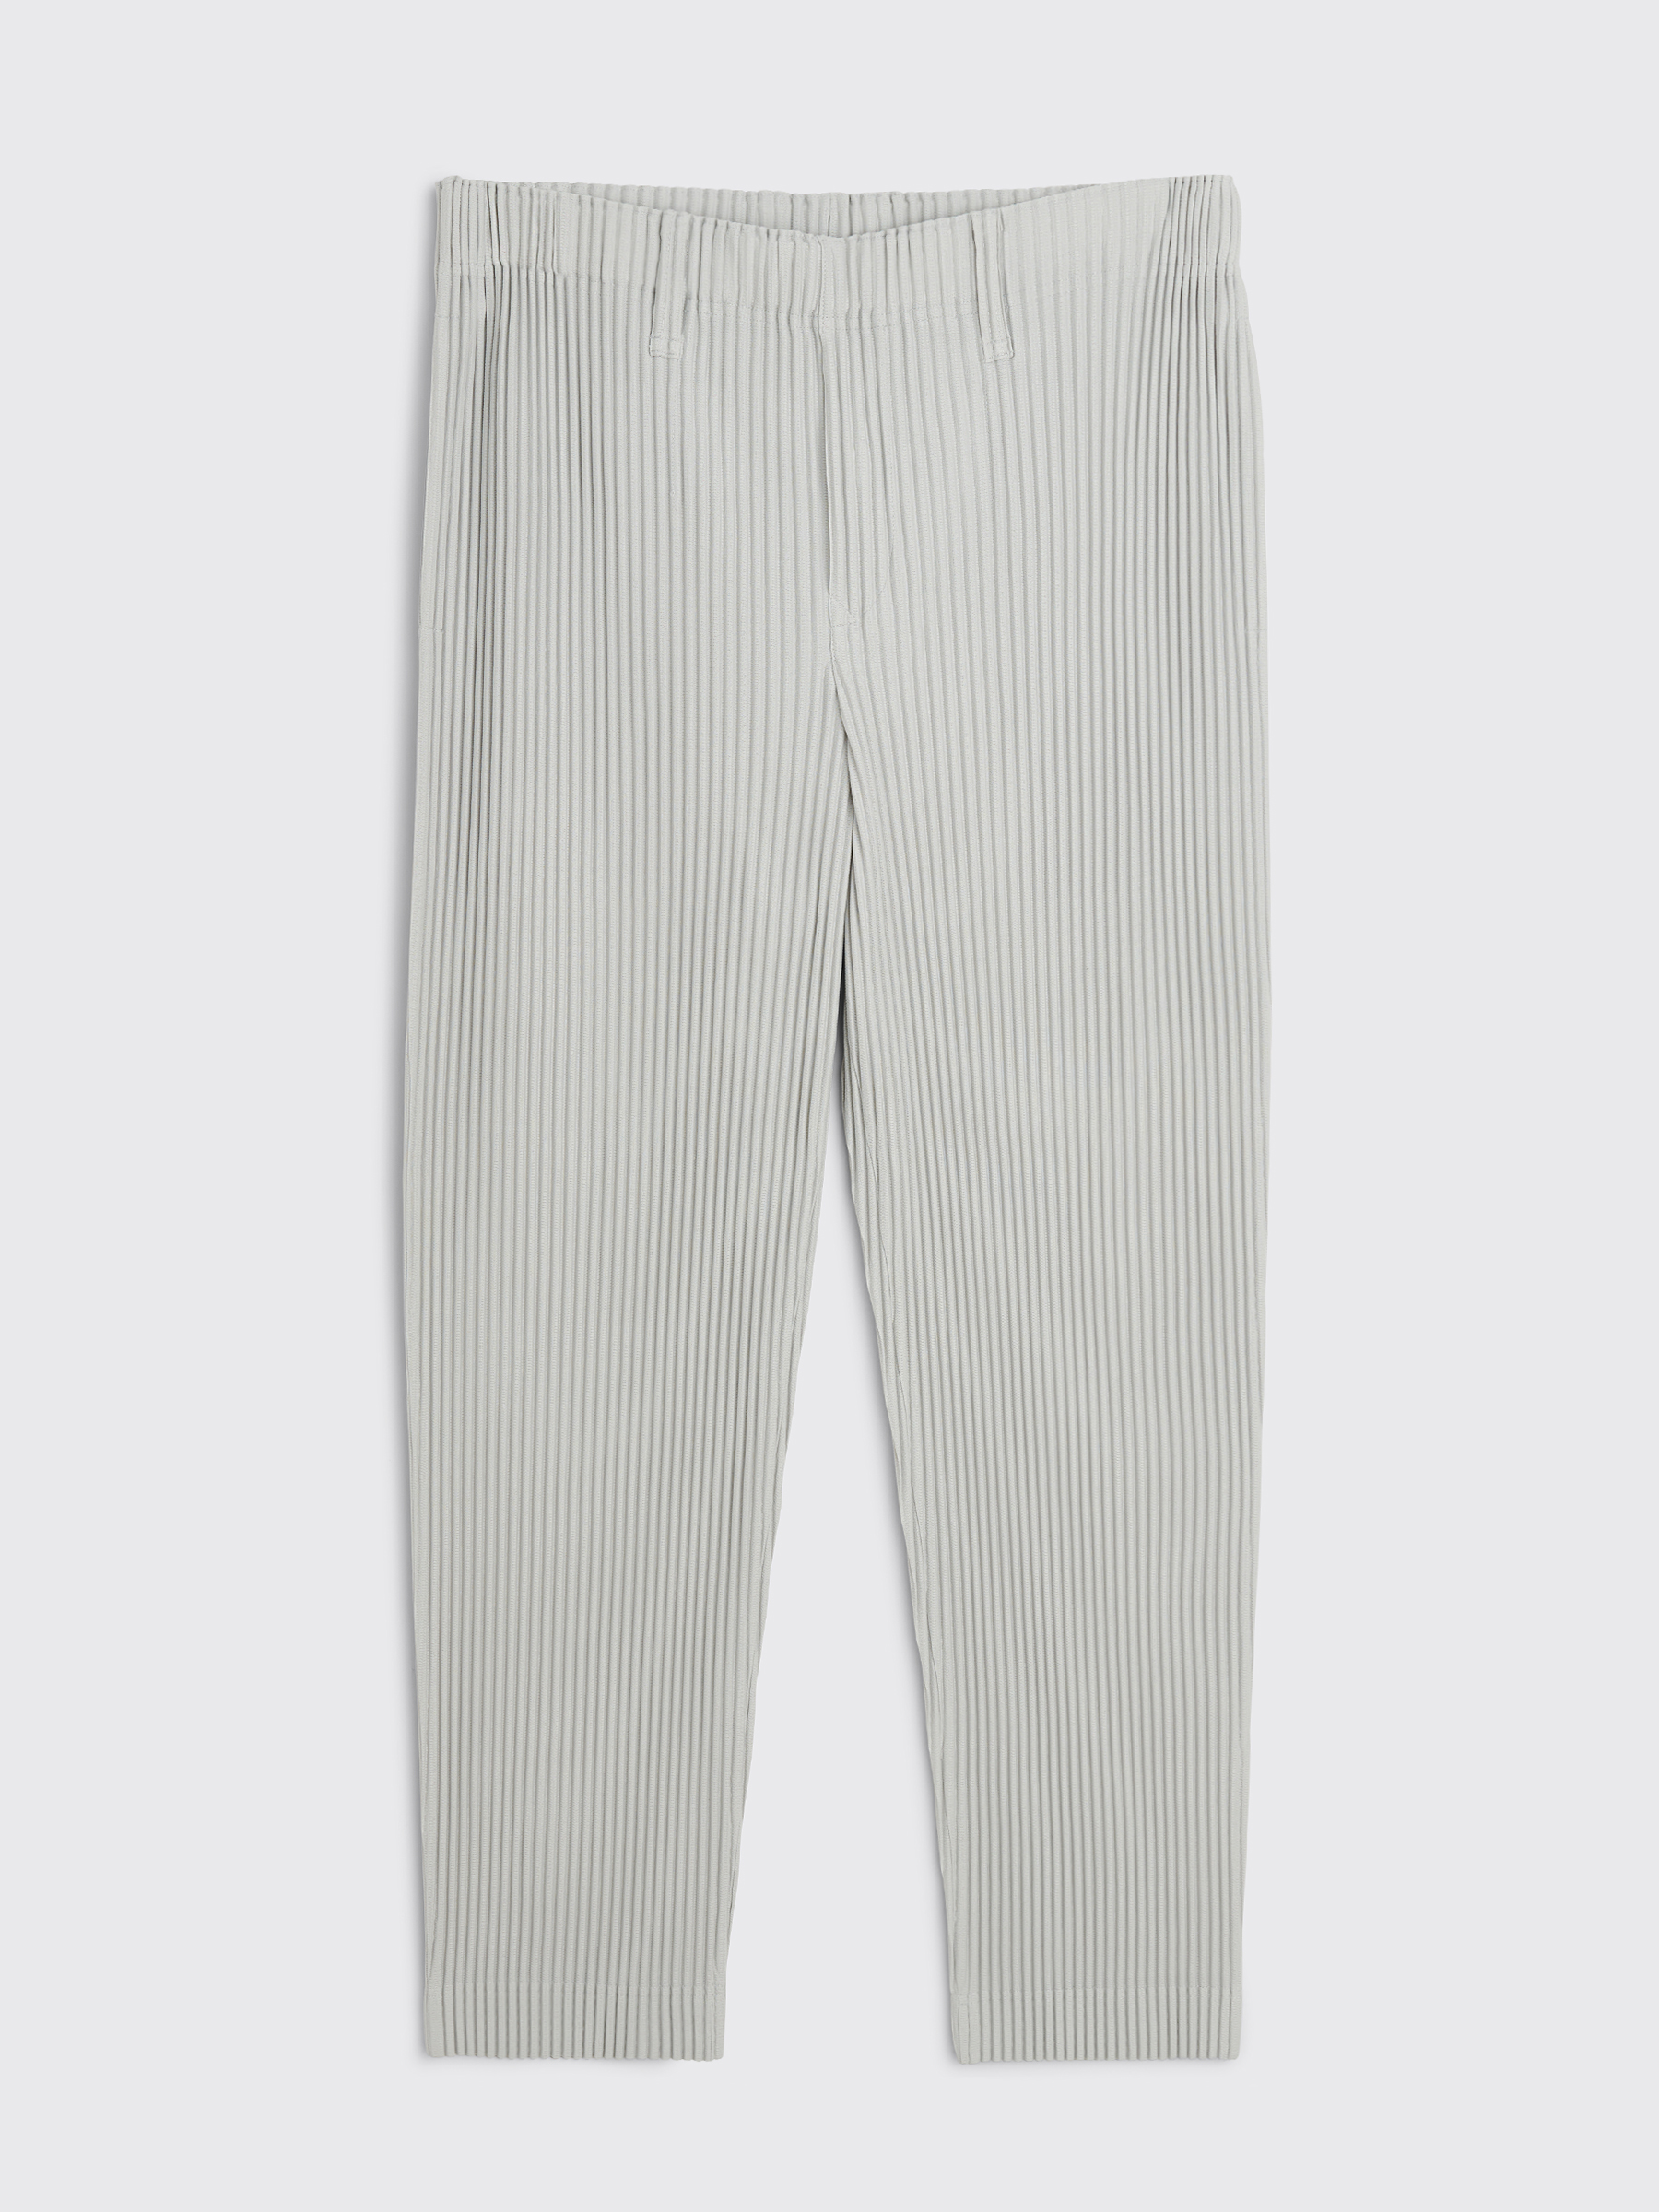 Très Bien - Homme Plissé Issey Miyake Pleated Pants Light Grey